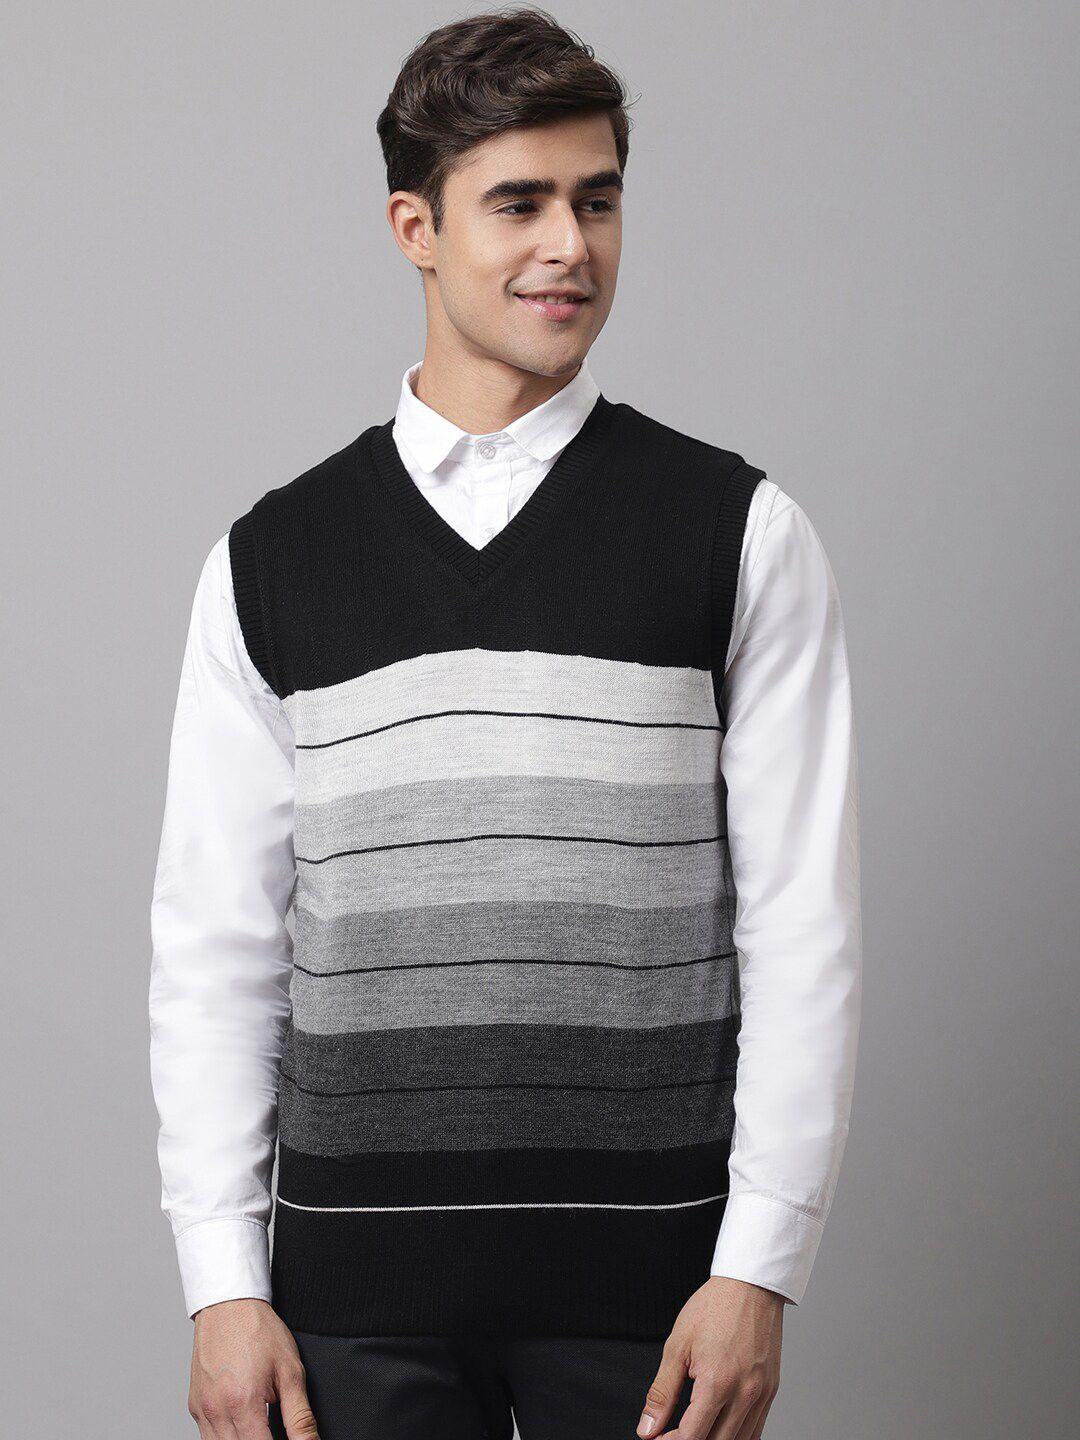 cantabil-men-black-&-white-striped-sweater-vest